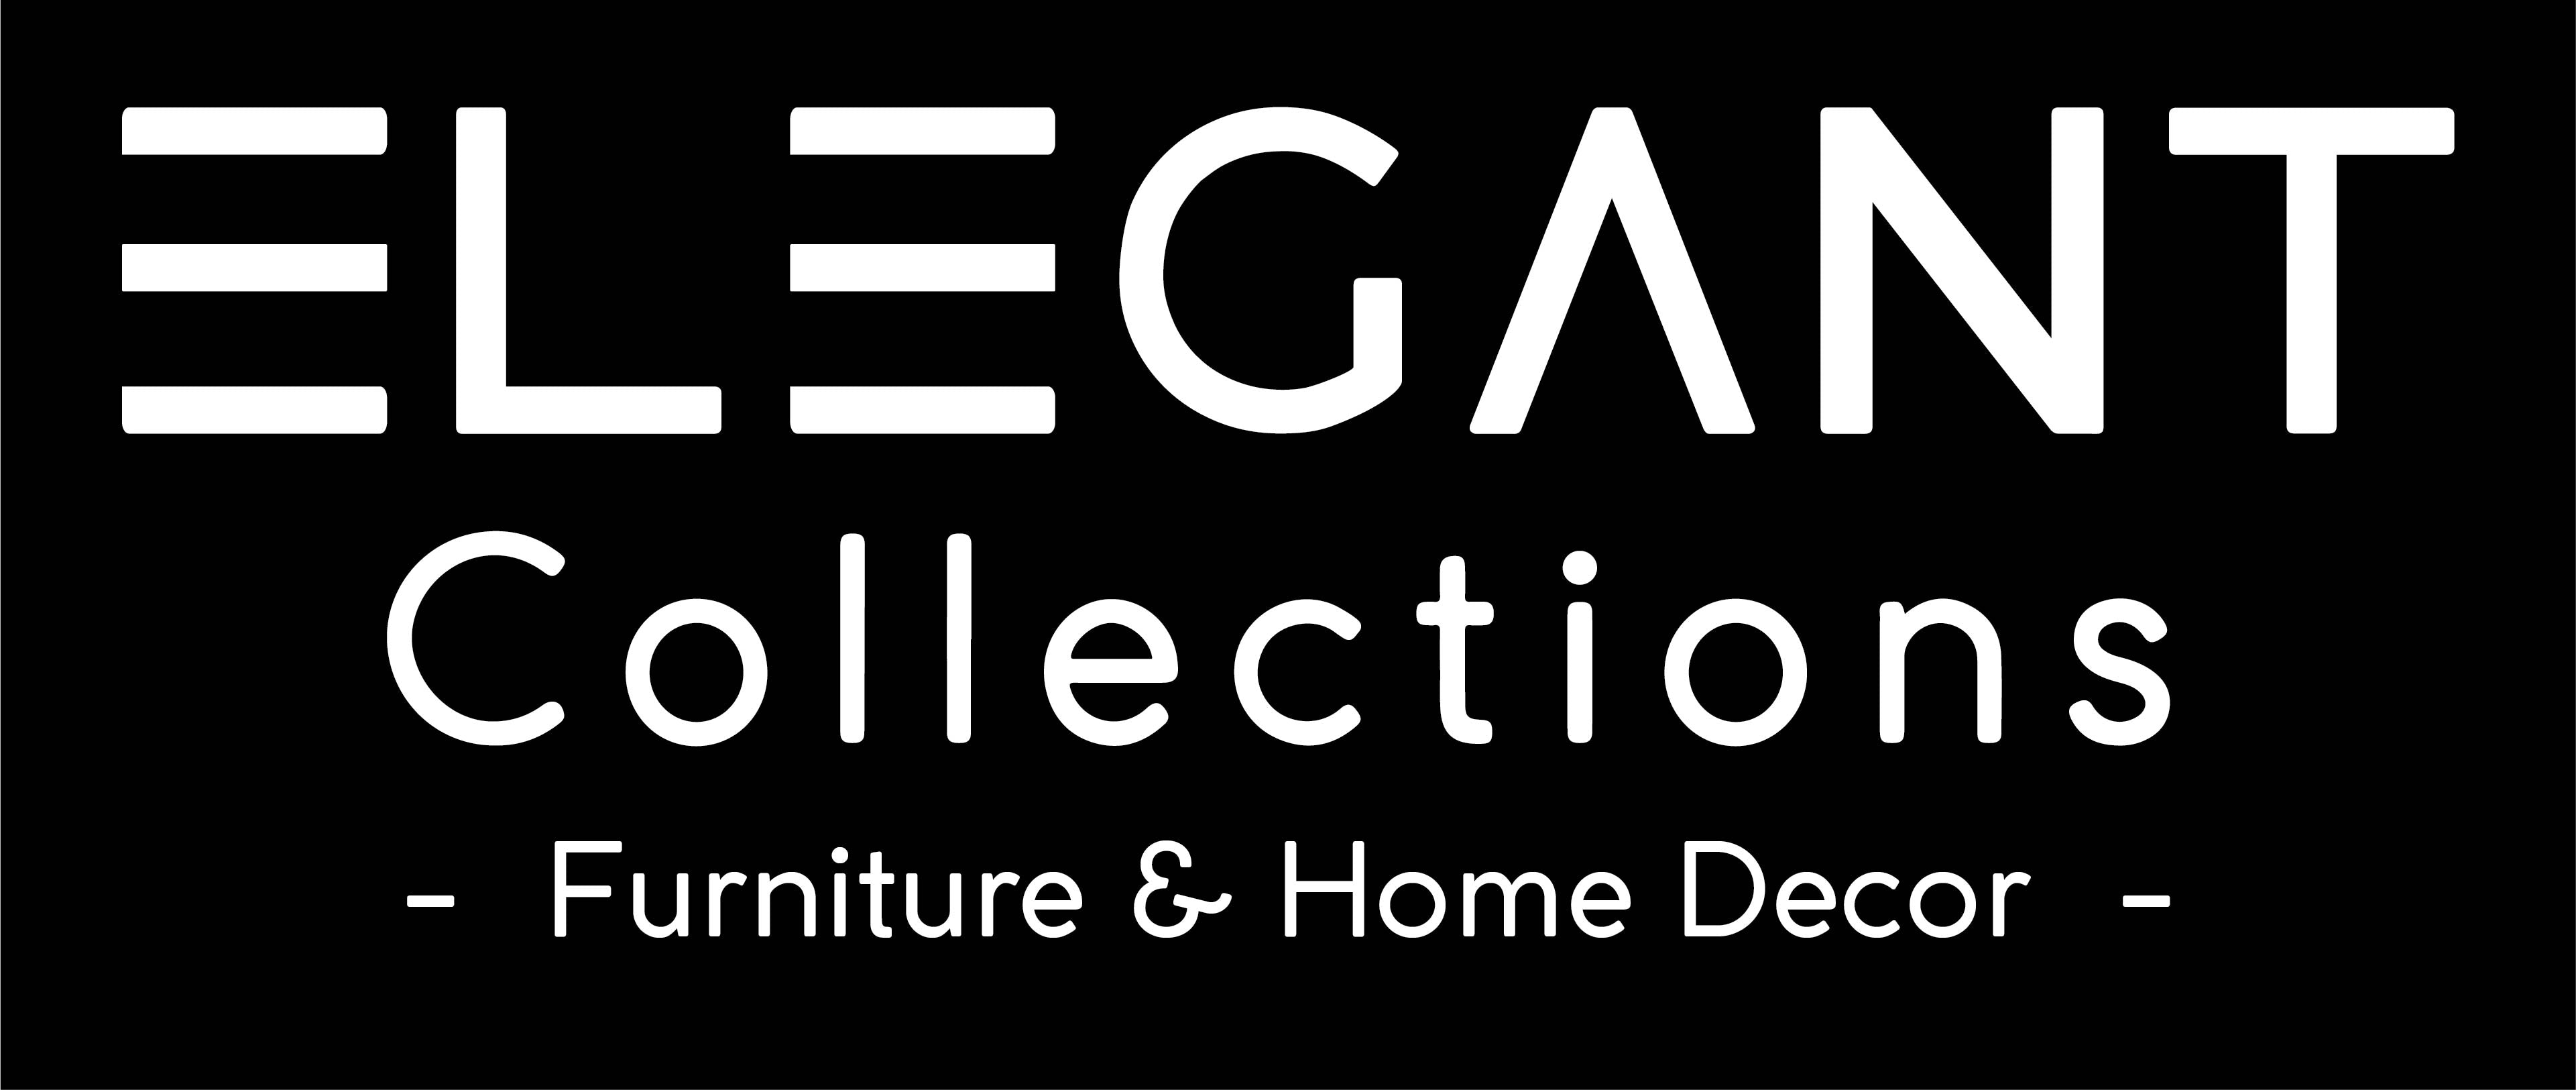 Elegant Collections 